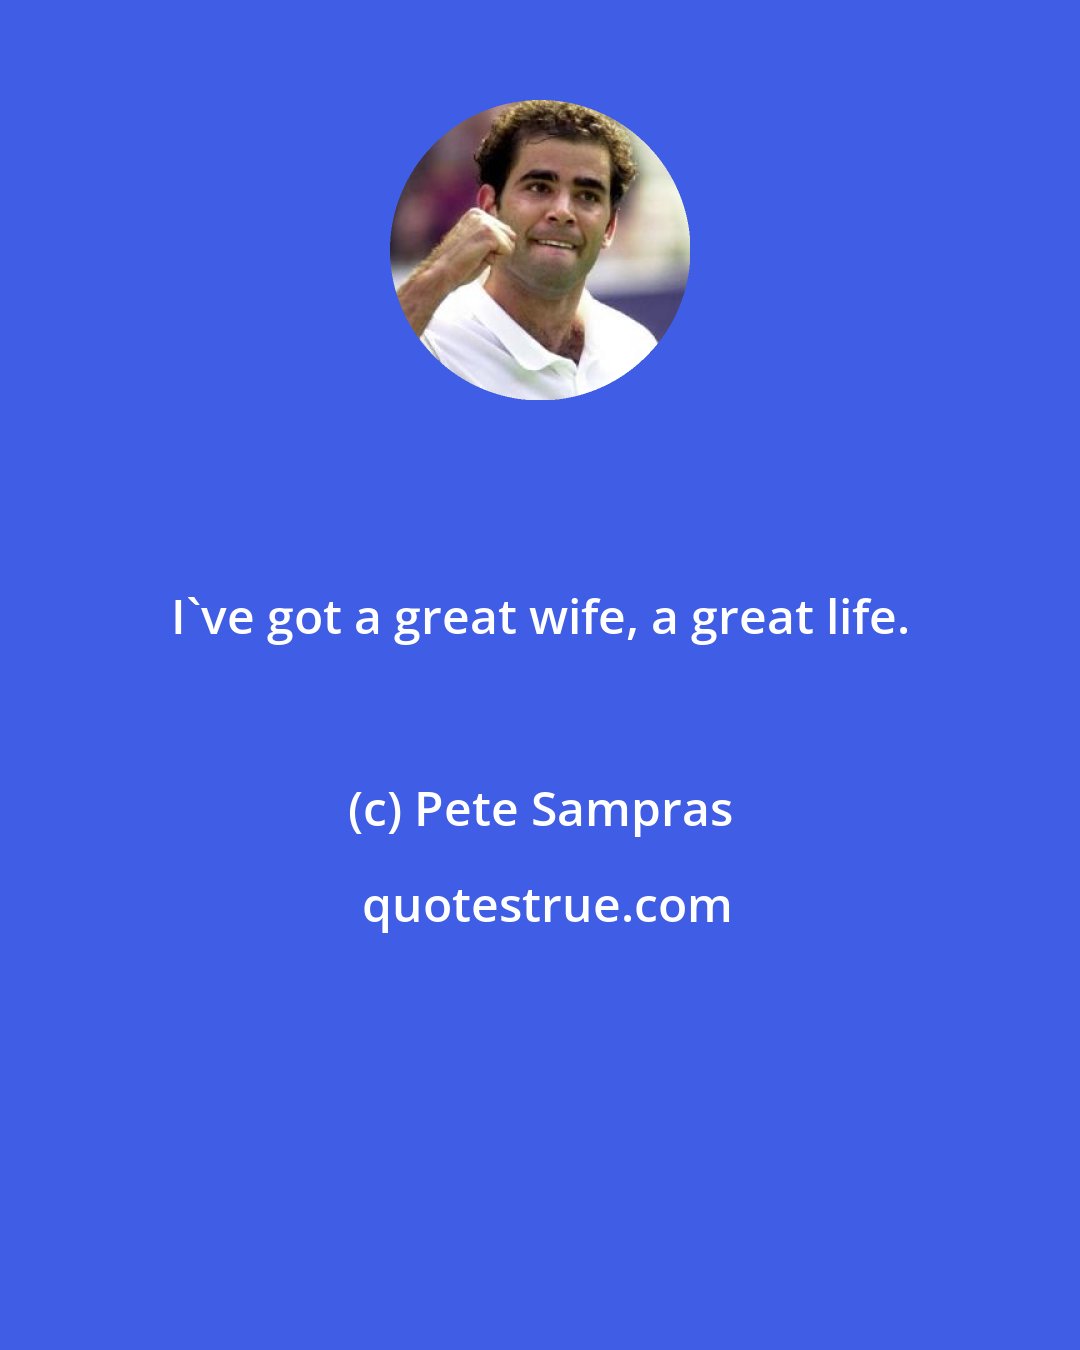 Pete Sampras: I've got a great wife, a great life.